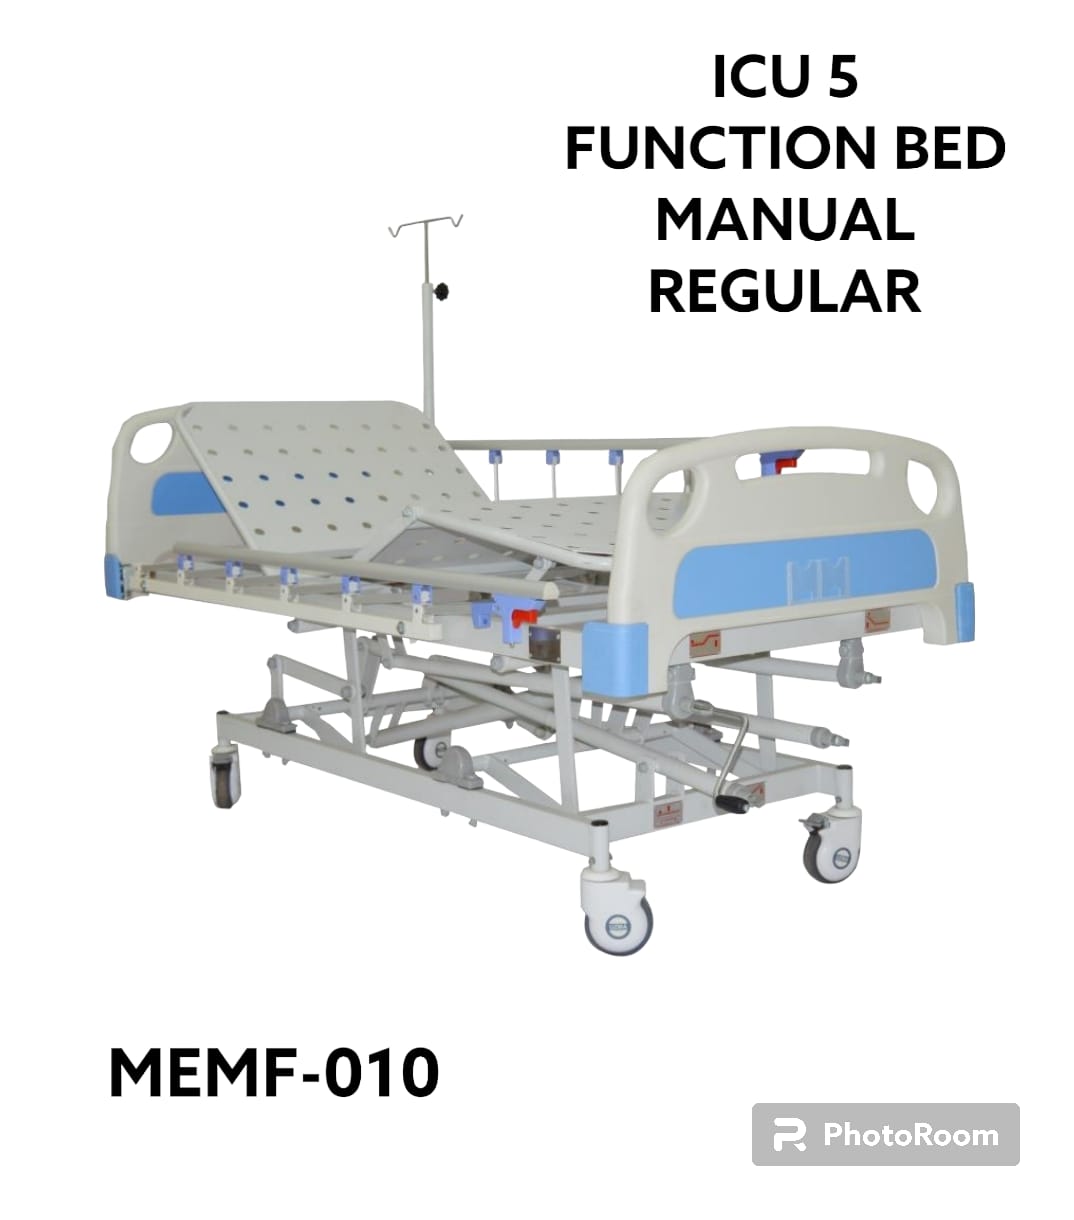 ICU 5 -FUNCTION BED MANUAL REGULAR